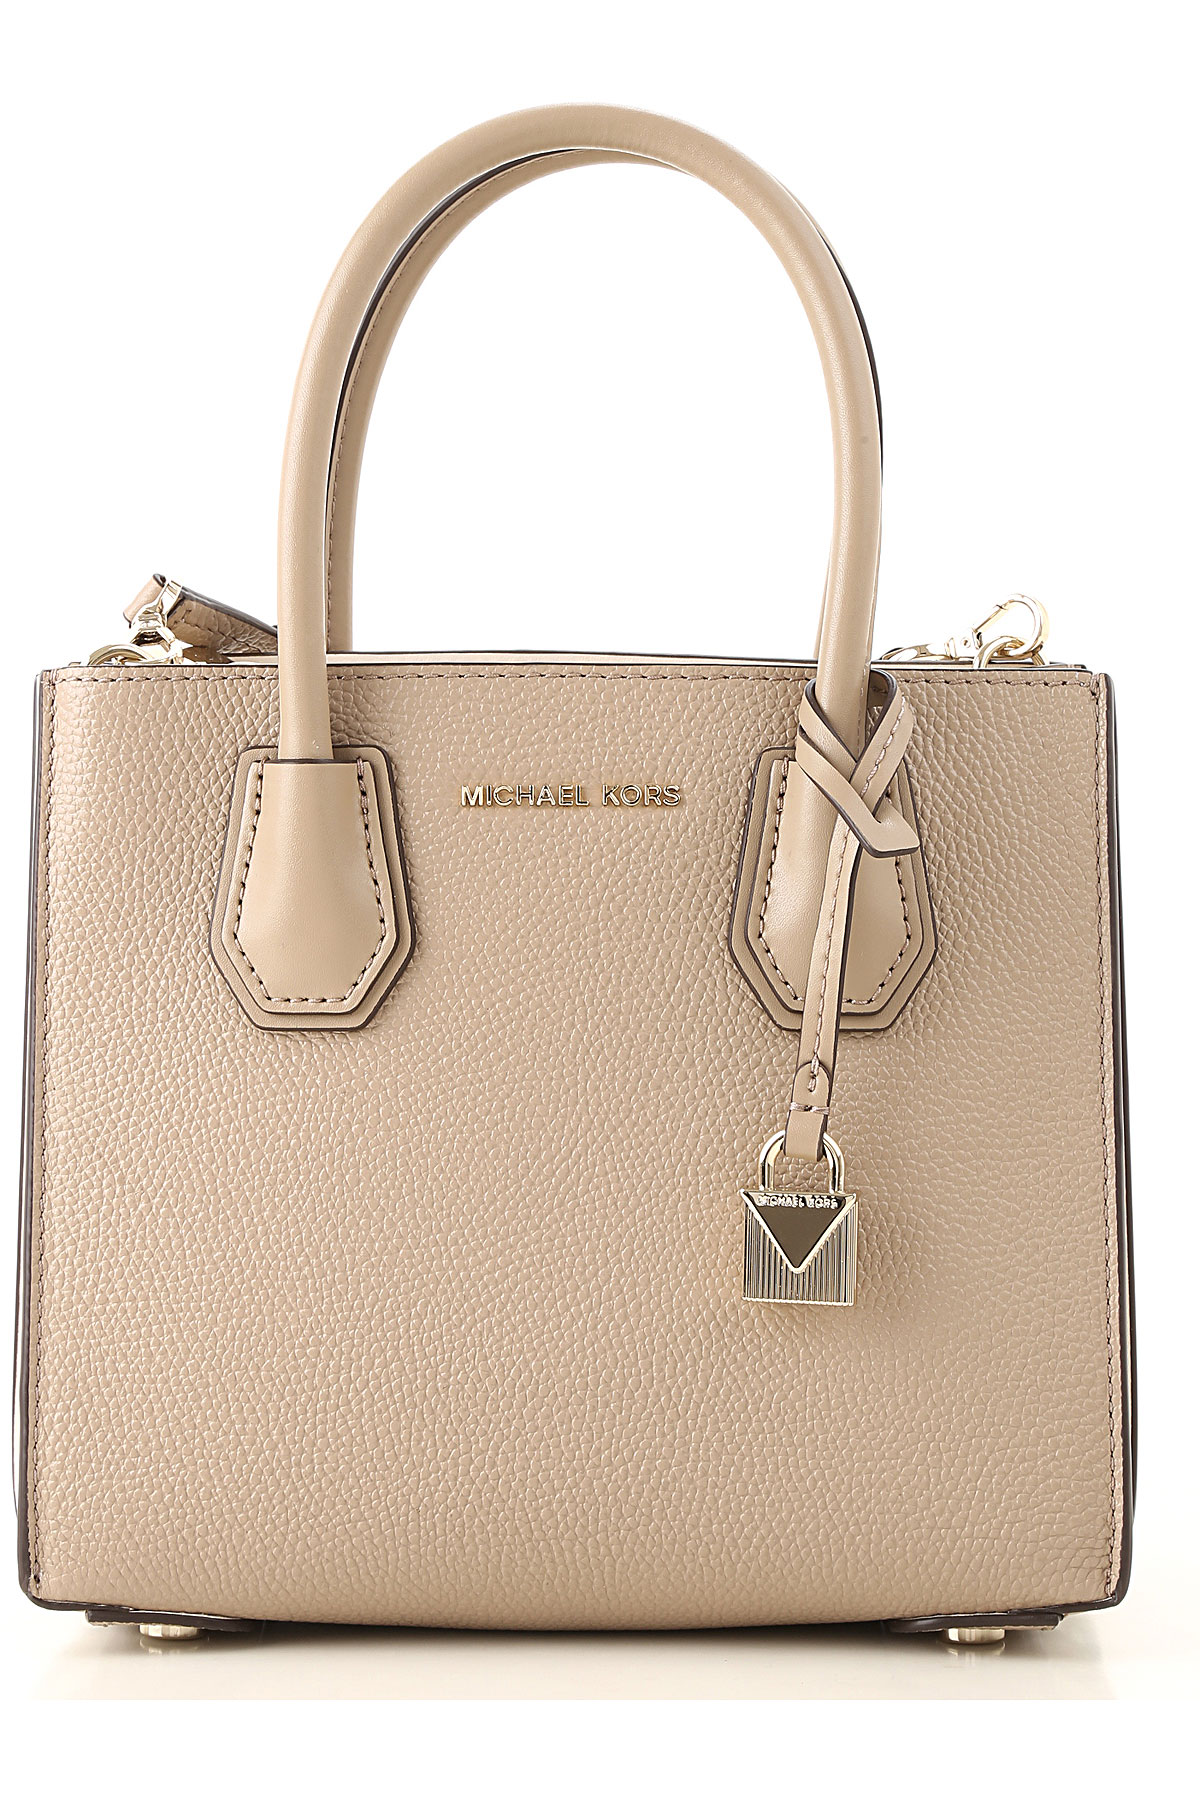 Handbags Michael Kors, Style code: 30t8tm9m2l-208-A938